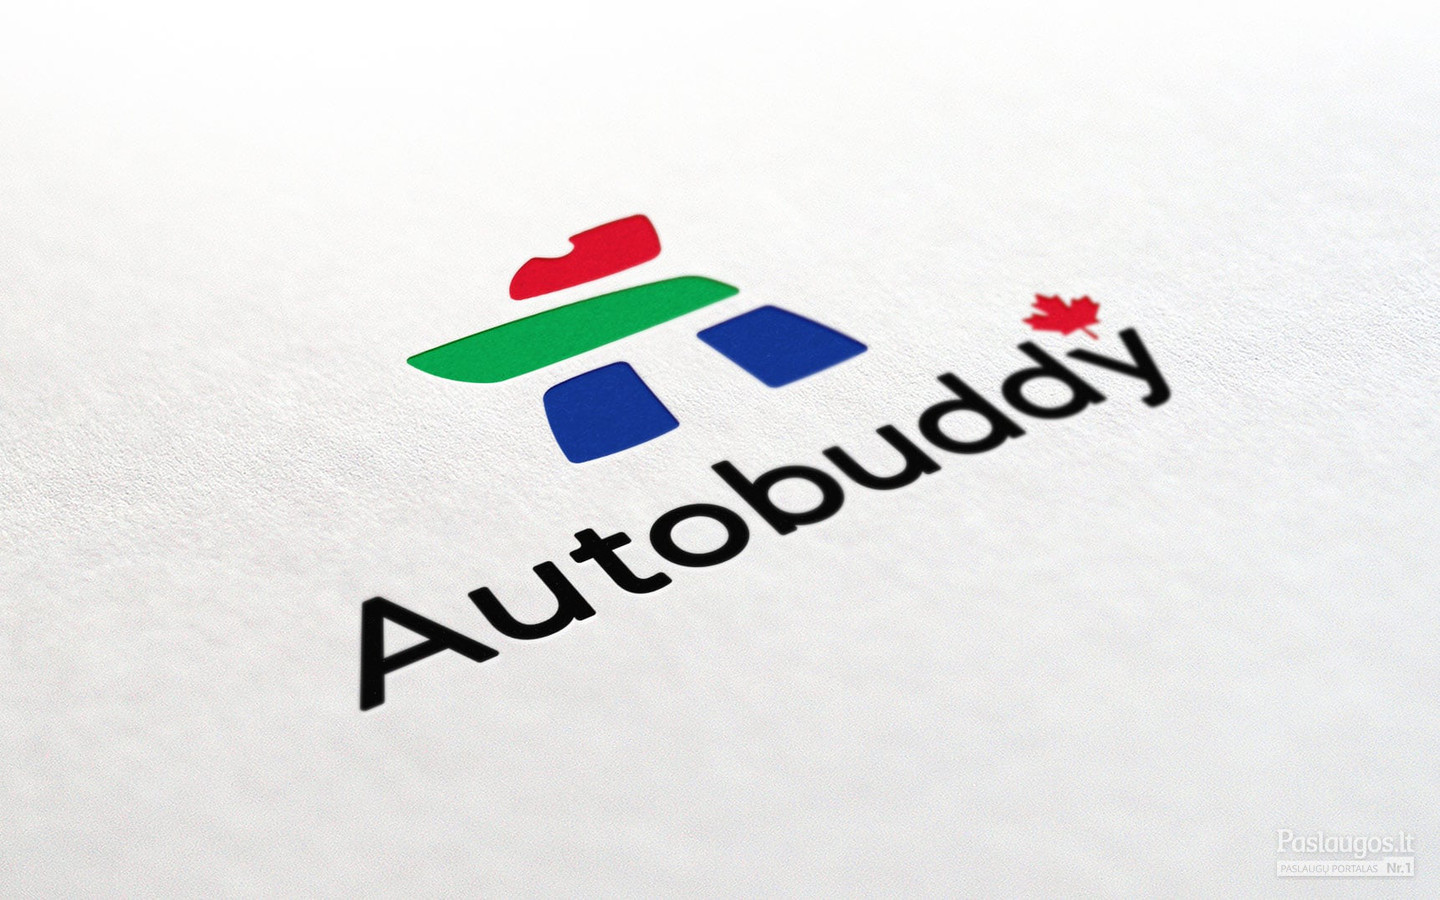 Autobuddy - Automobiliu pardavimo asistentas / Logotipas, Firminis stilius, Logobook / Kostas Vasarevicius - kostazzz@gmail.com